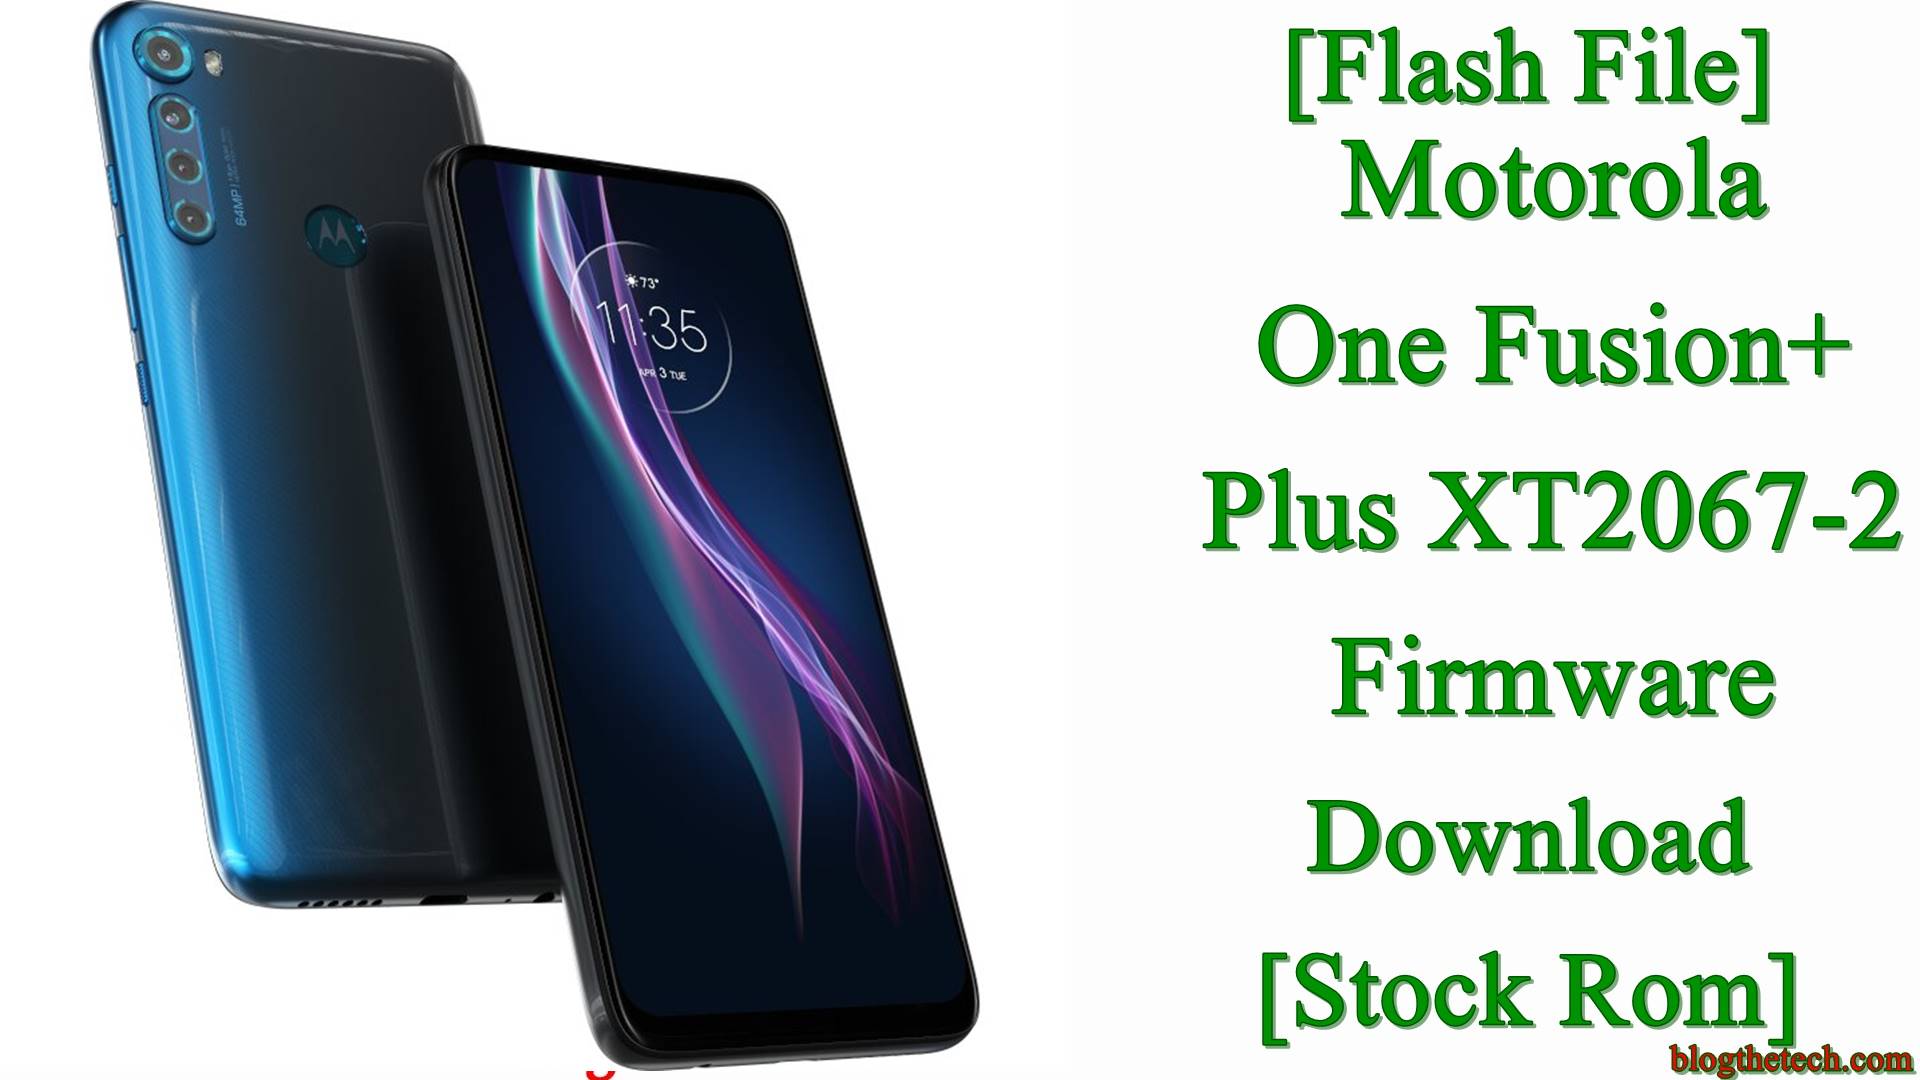 Motorola One Fusion+ Plus XT2067-2 Firmware